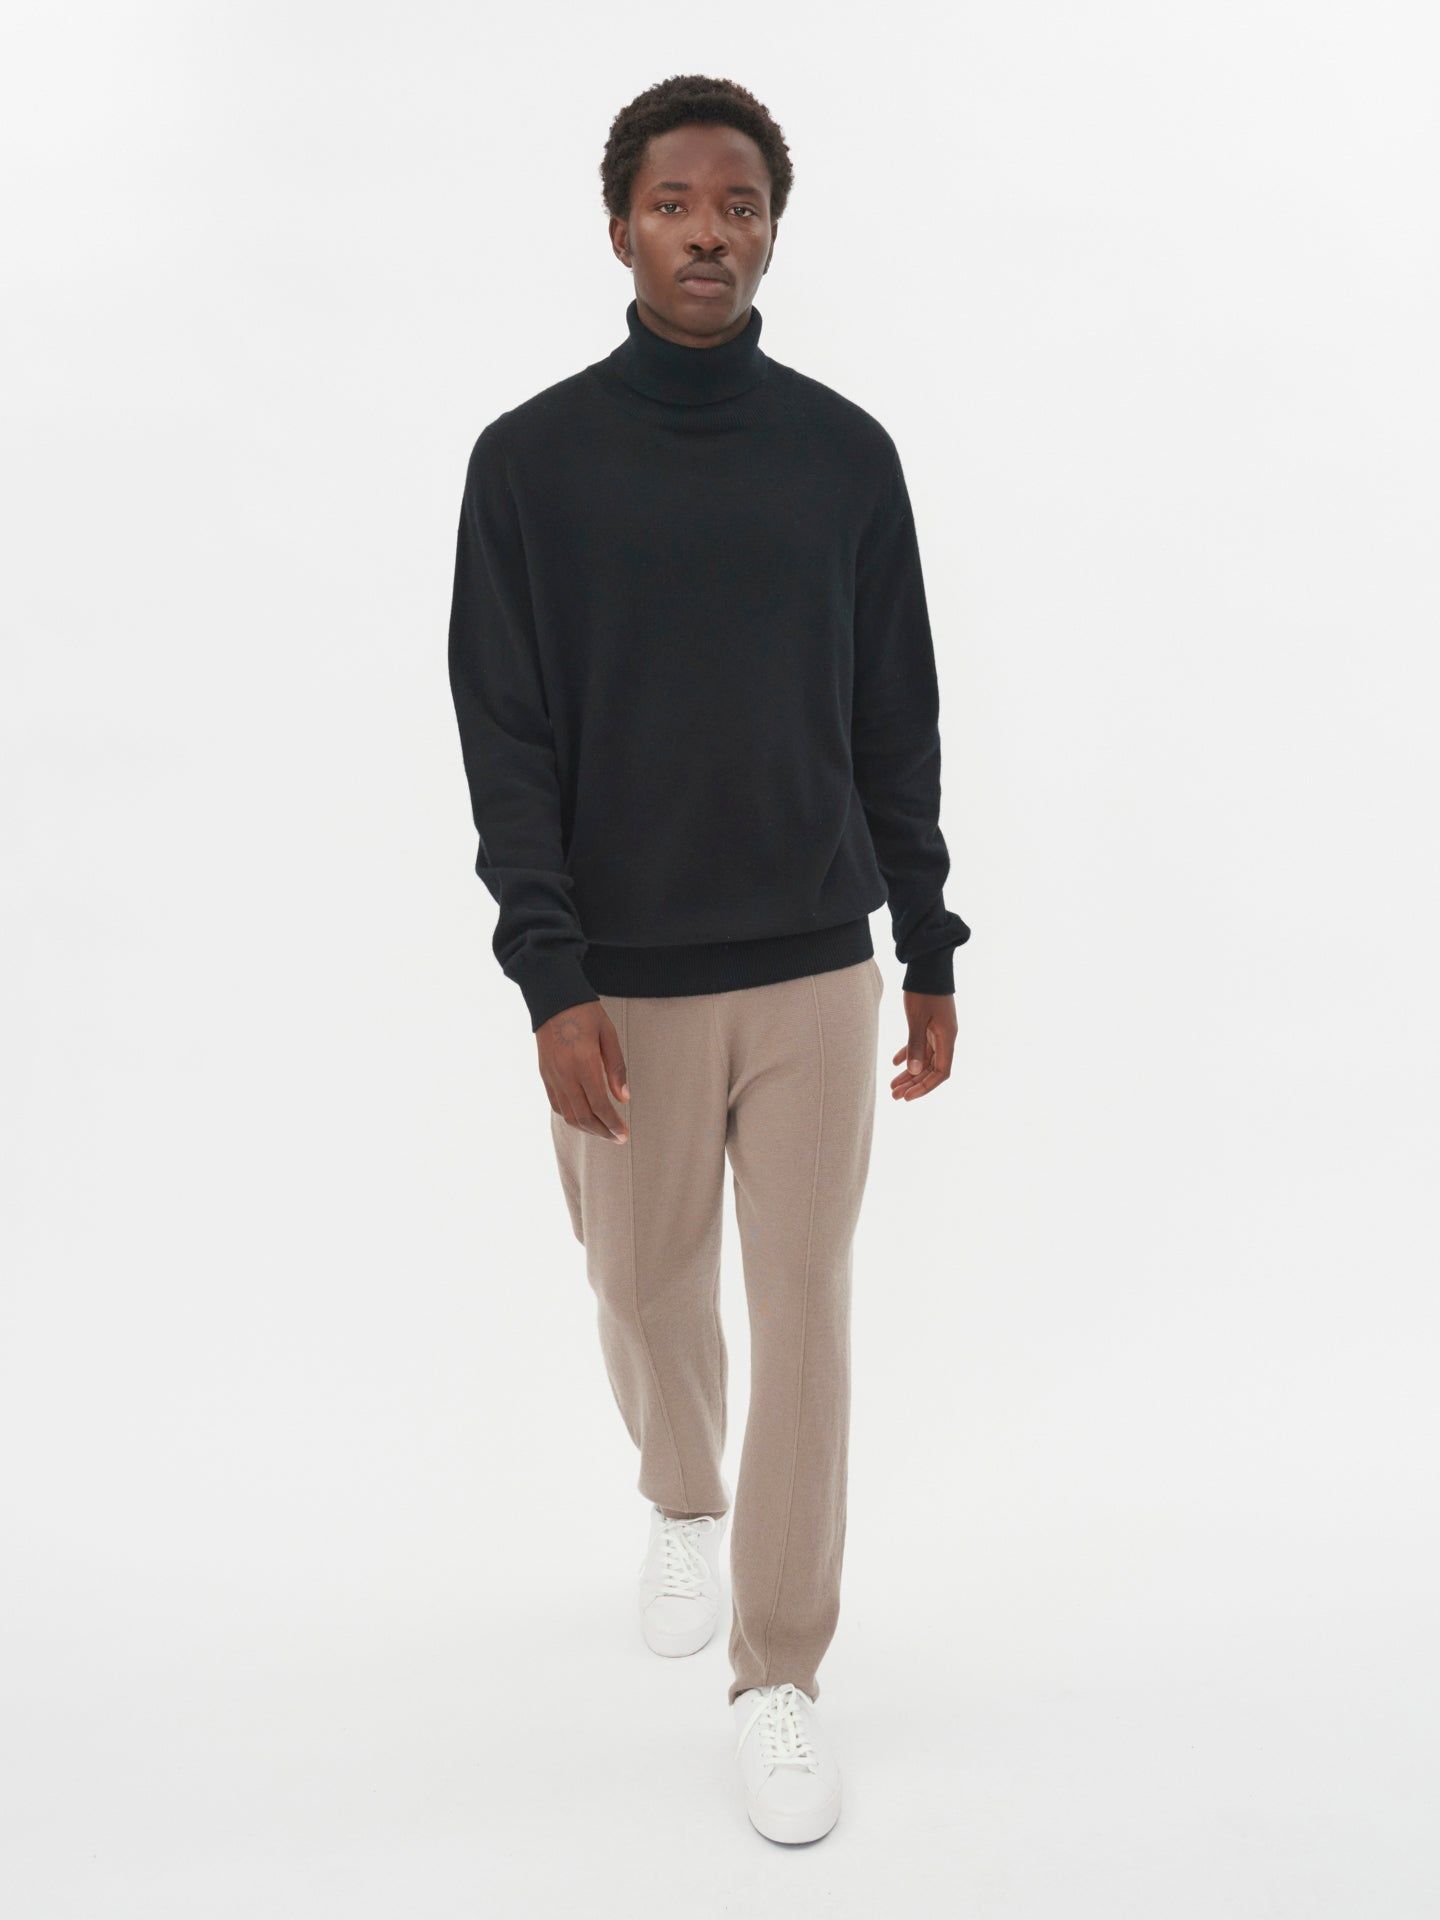 Men's Cashmere Turtle Neck Sweater Black - Gobi Cashmere